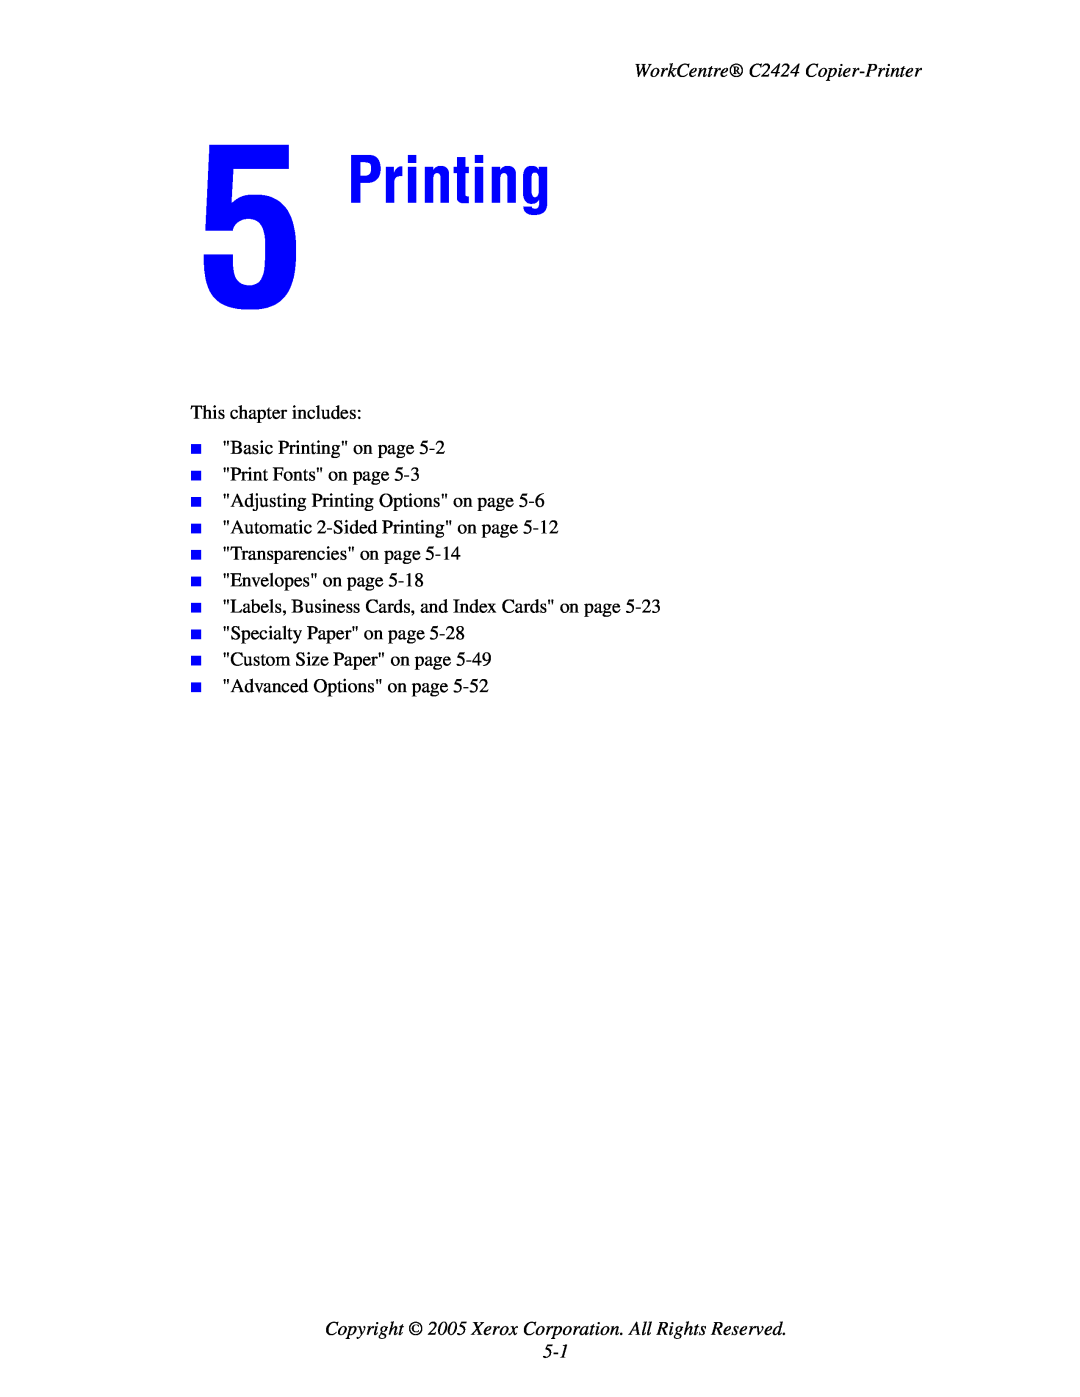 2Wire C424 manual WorkCentre C2424 Copier-Printer, Printing 